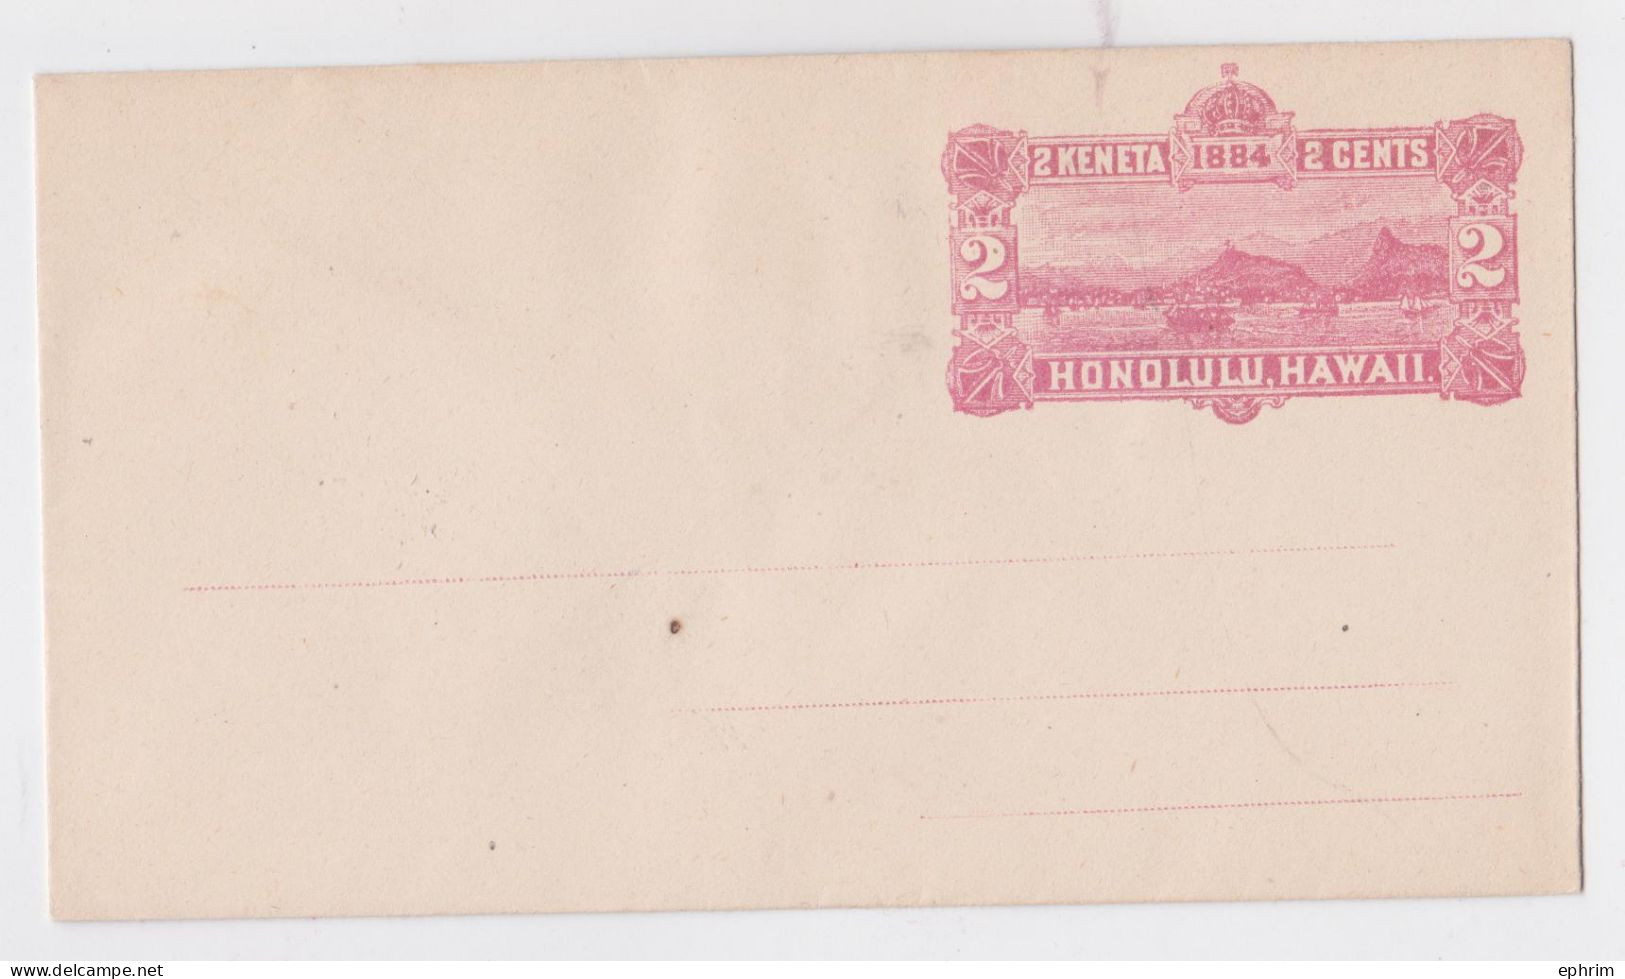 Honolulu Hawaii Hawaï Enveloppe Entier Postal Vierge Mint Postal Stationery Cover Letter Mail Red 2 Keneta Cents 1884 - Hawai